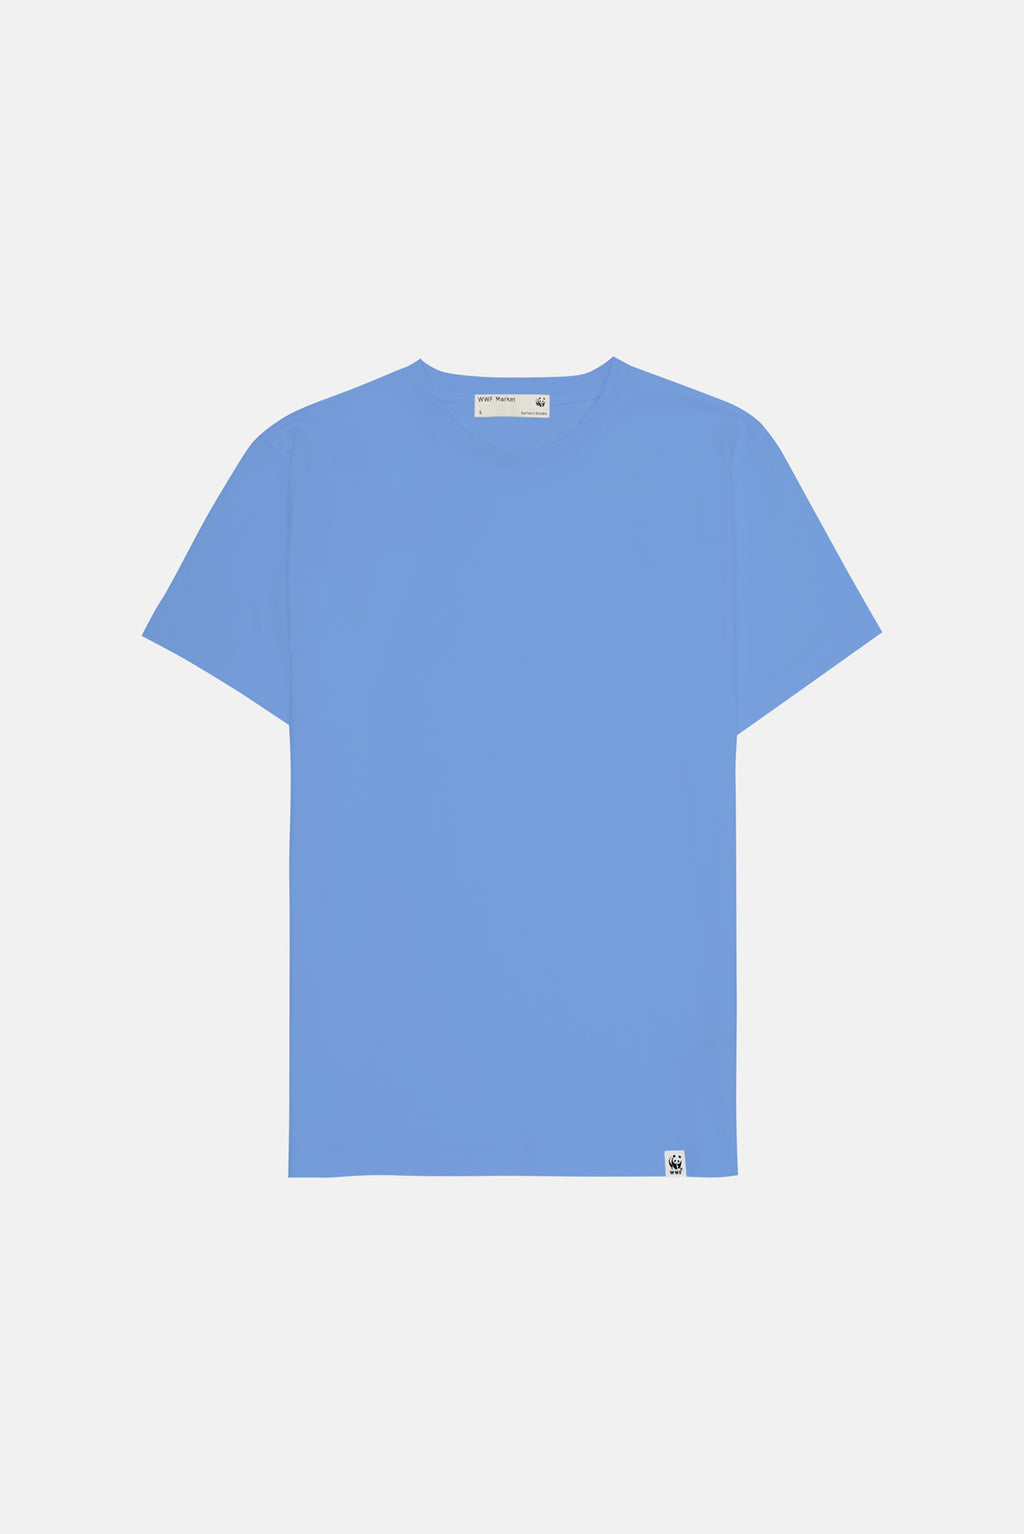 Basic Kadın Light-Weight T-shirt - Mavi